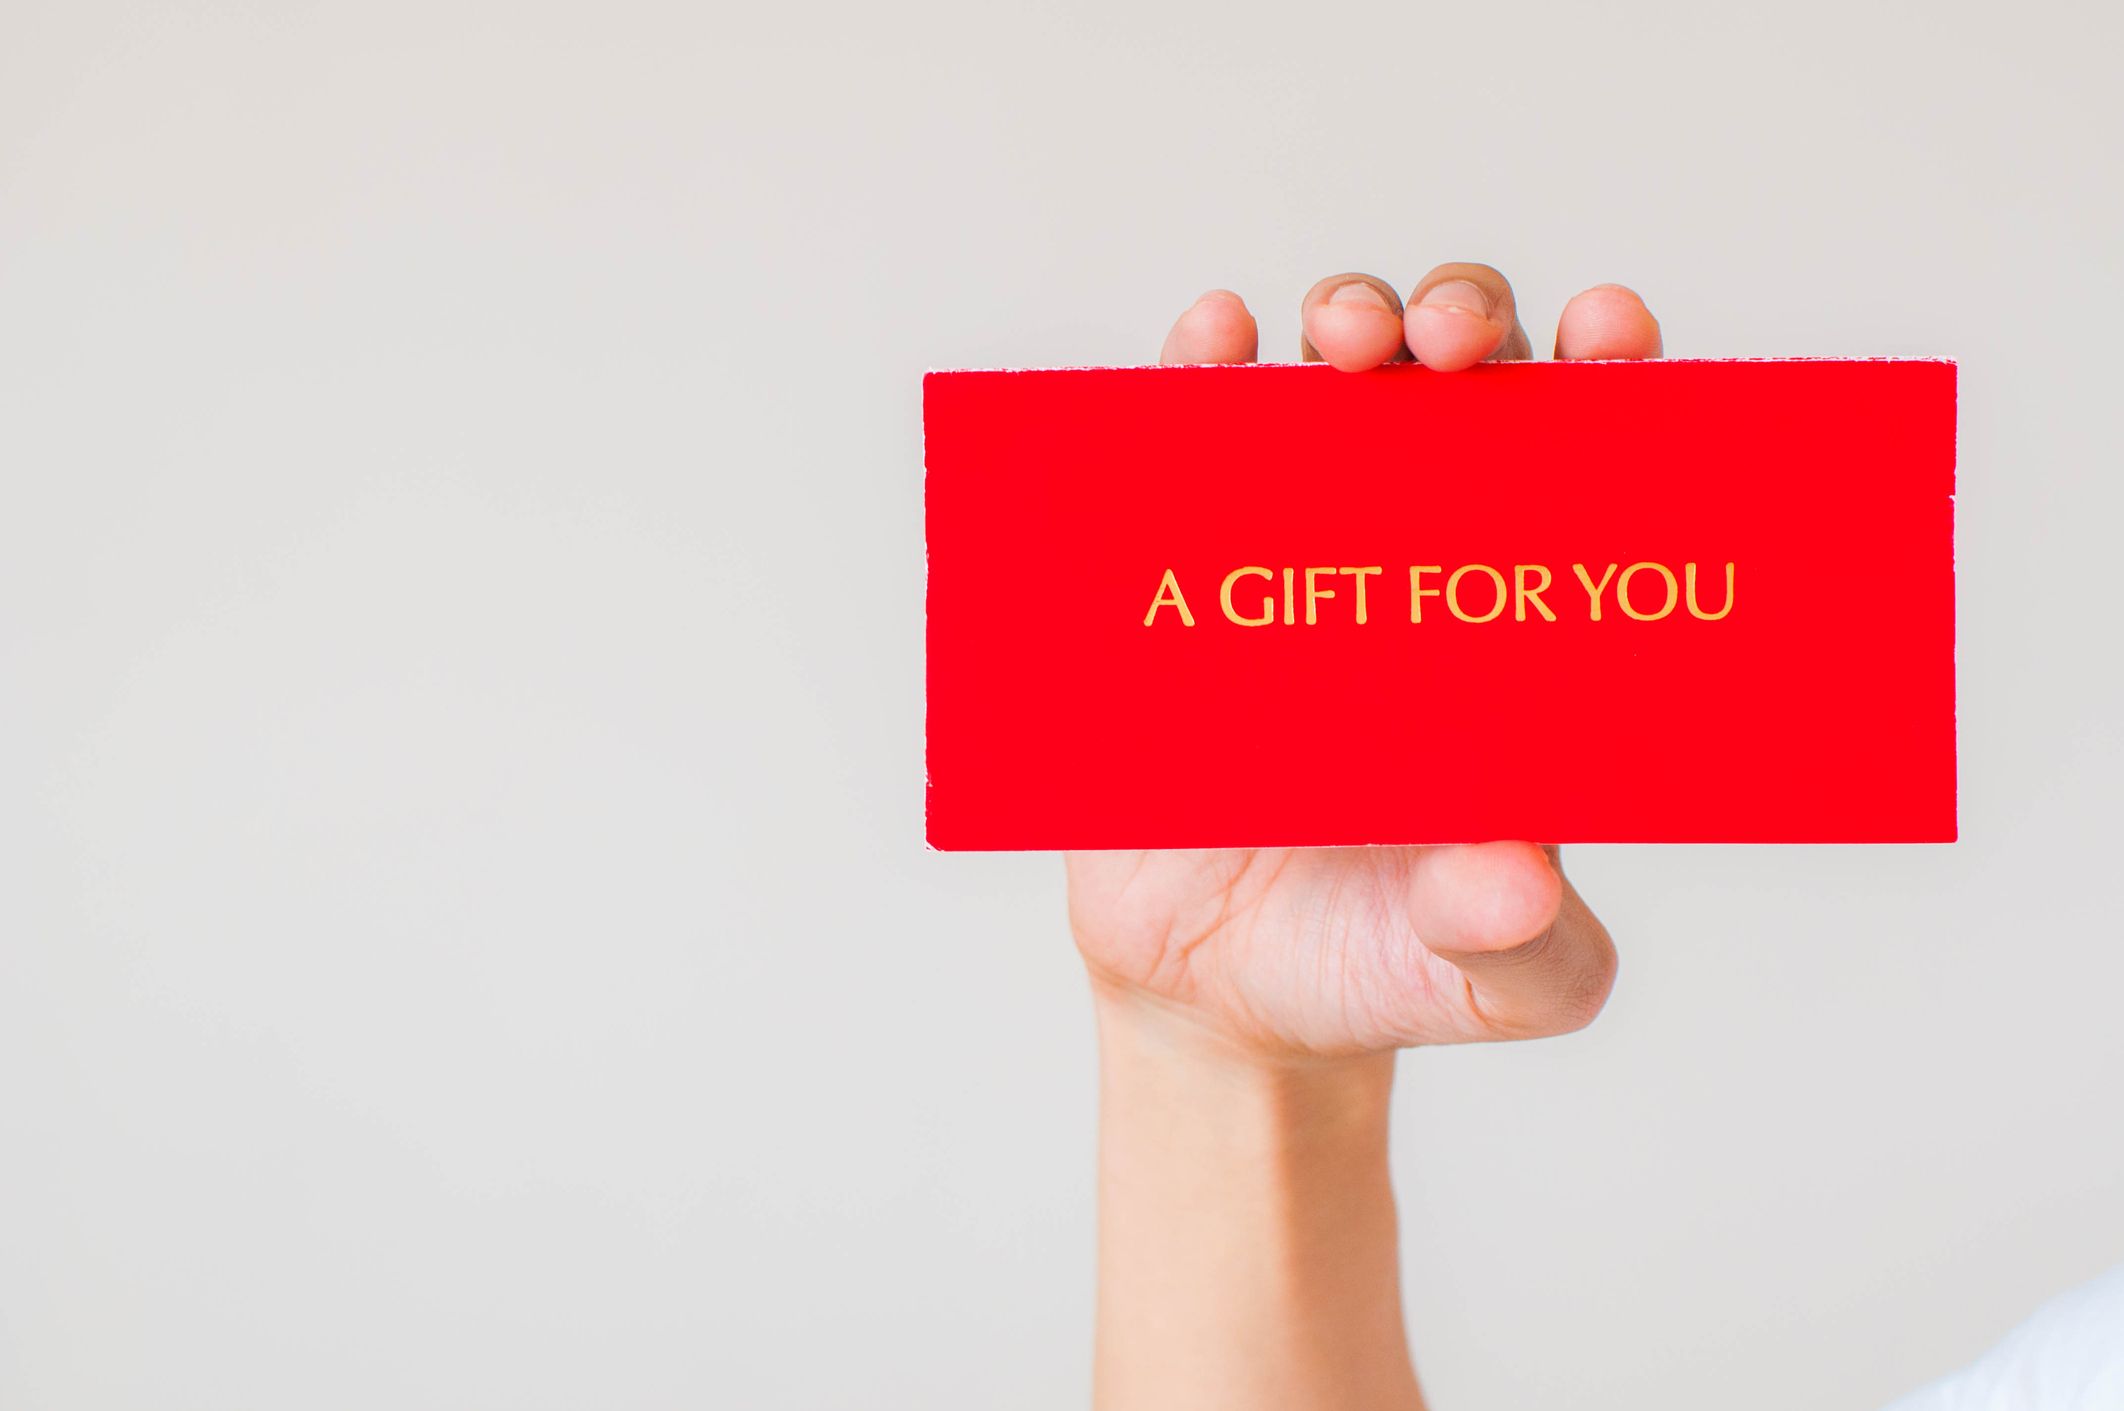 Alex de Berry on LinkedIn: #giftcards